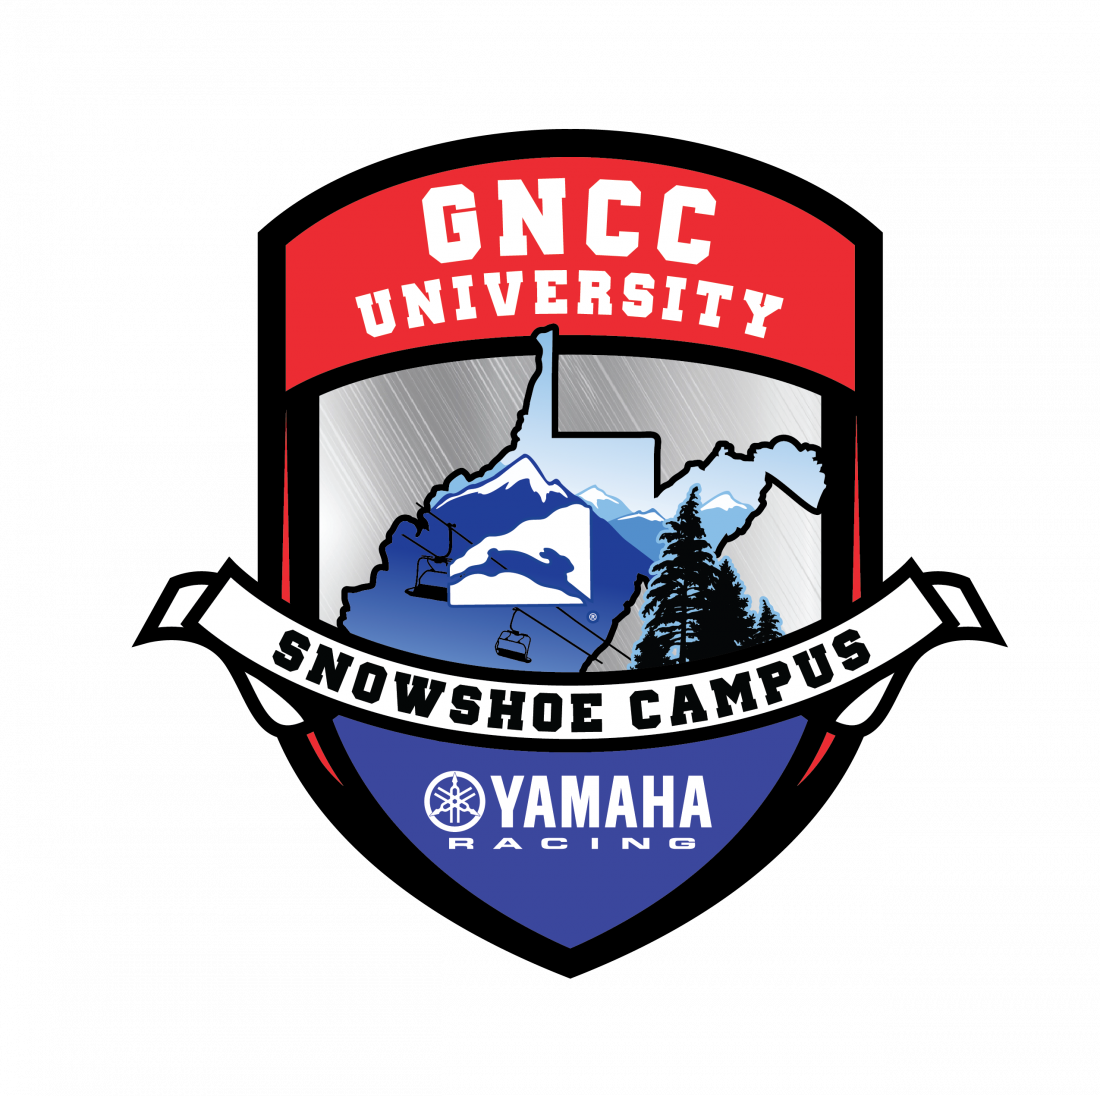 GNCC University